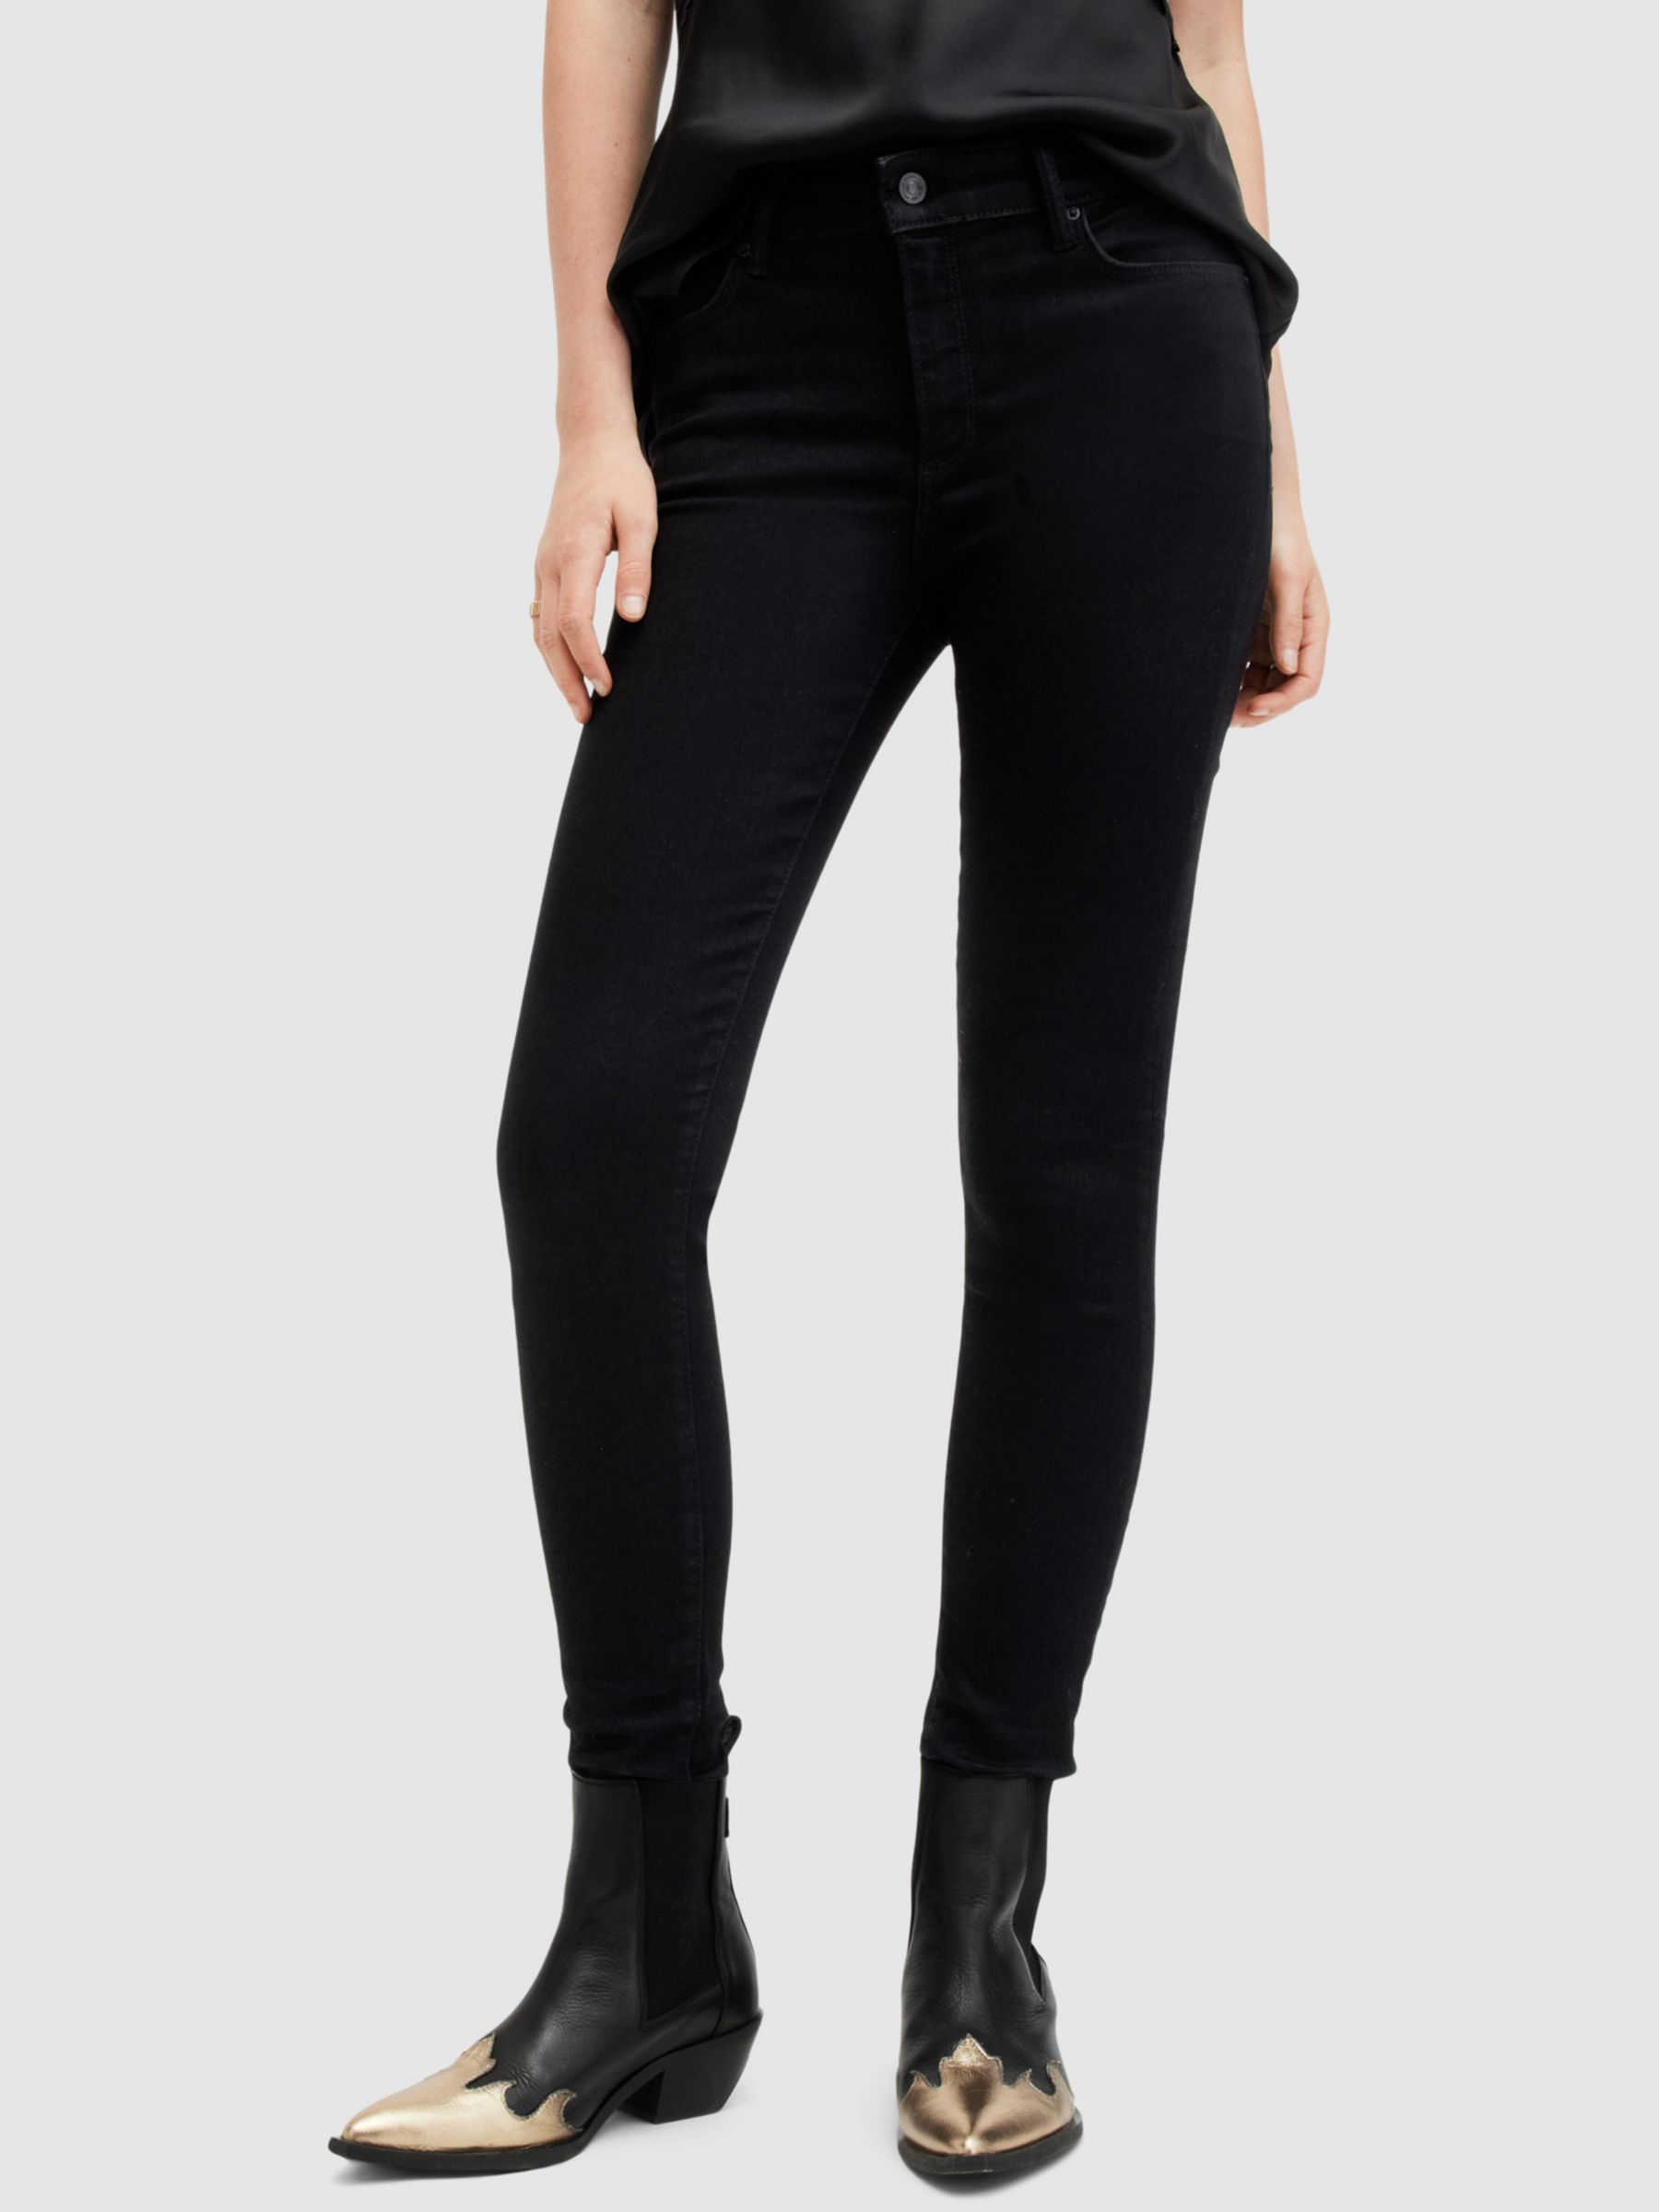 AllSaints Miller Sizeme Skinny Jeans, Black, L